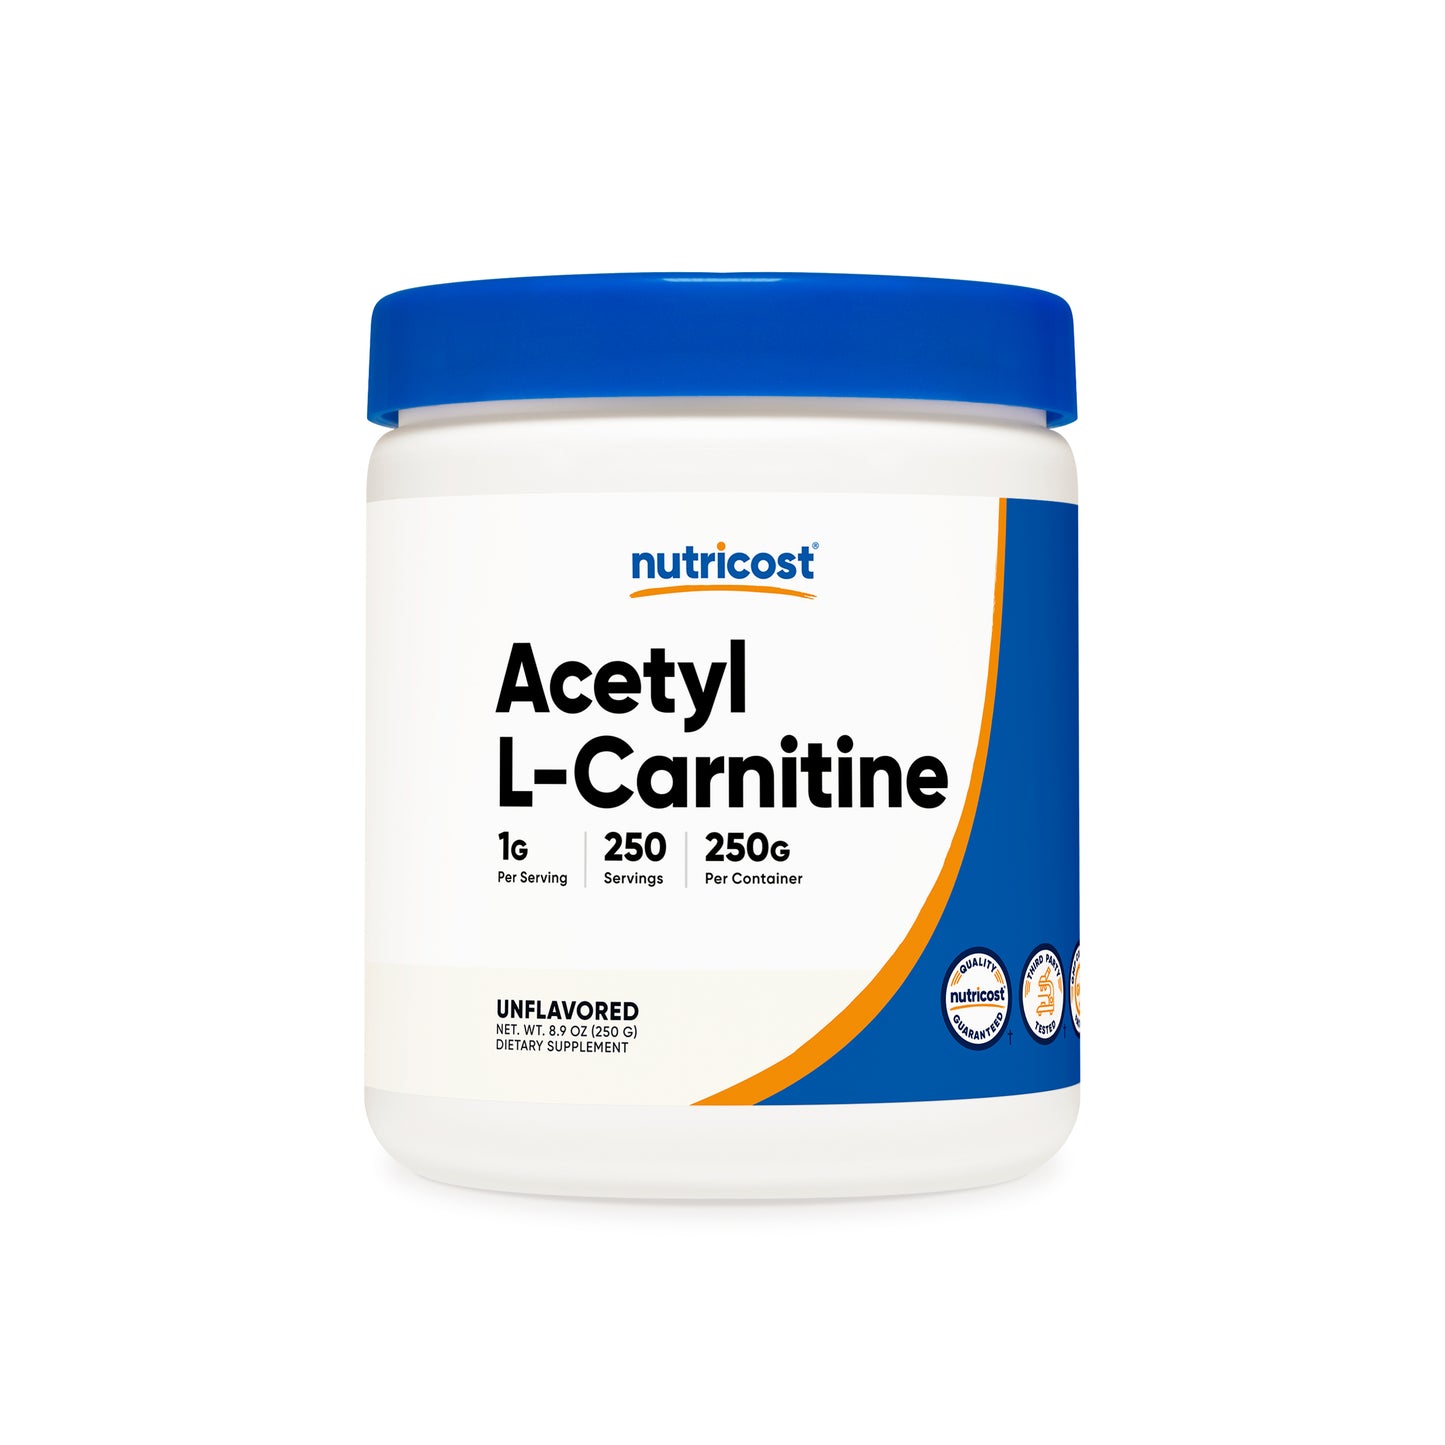 Nutricost Acetyl L-Carnitine Powder